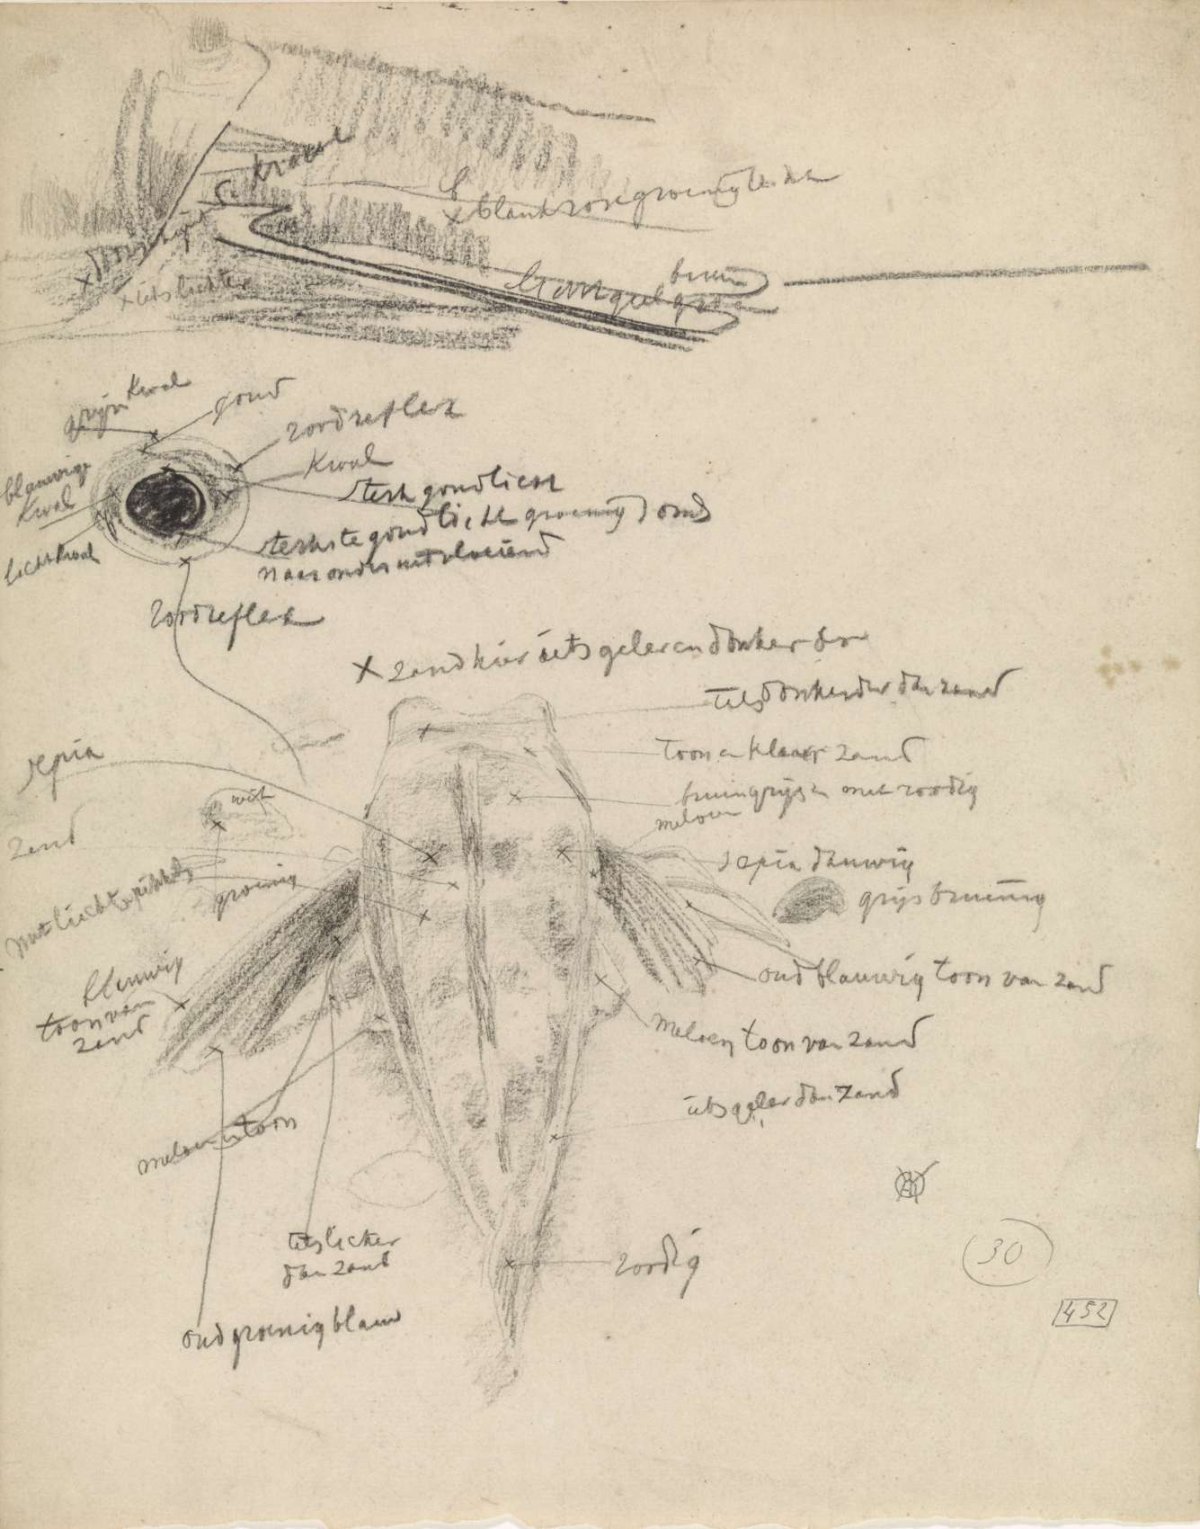 Poon seen on the back and studies of an eye, Gerrit Willem Dijsselhof, 1876 - 1924